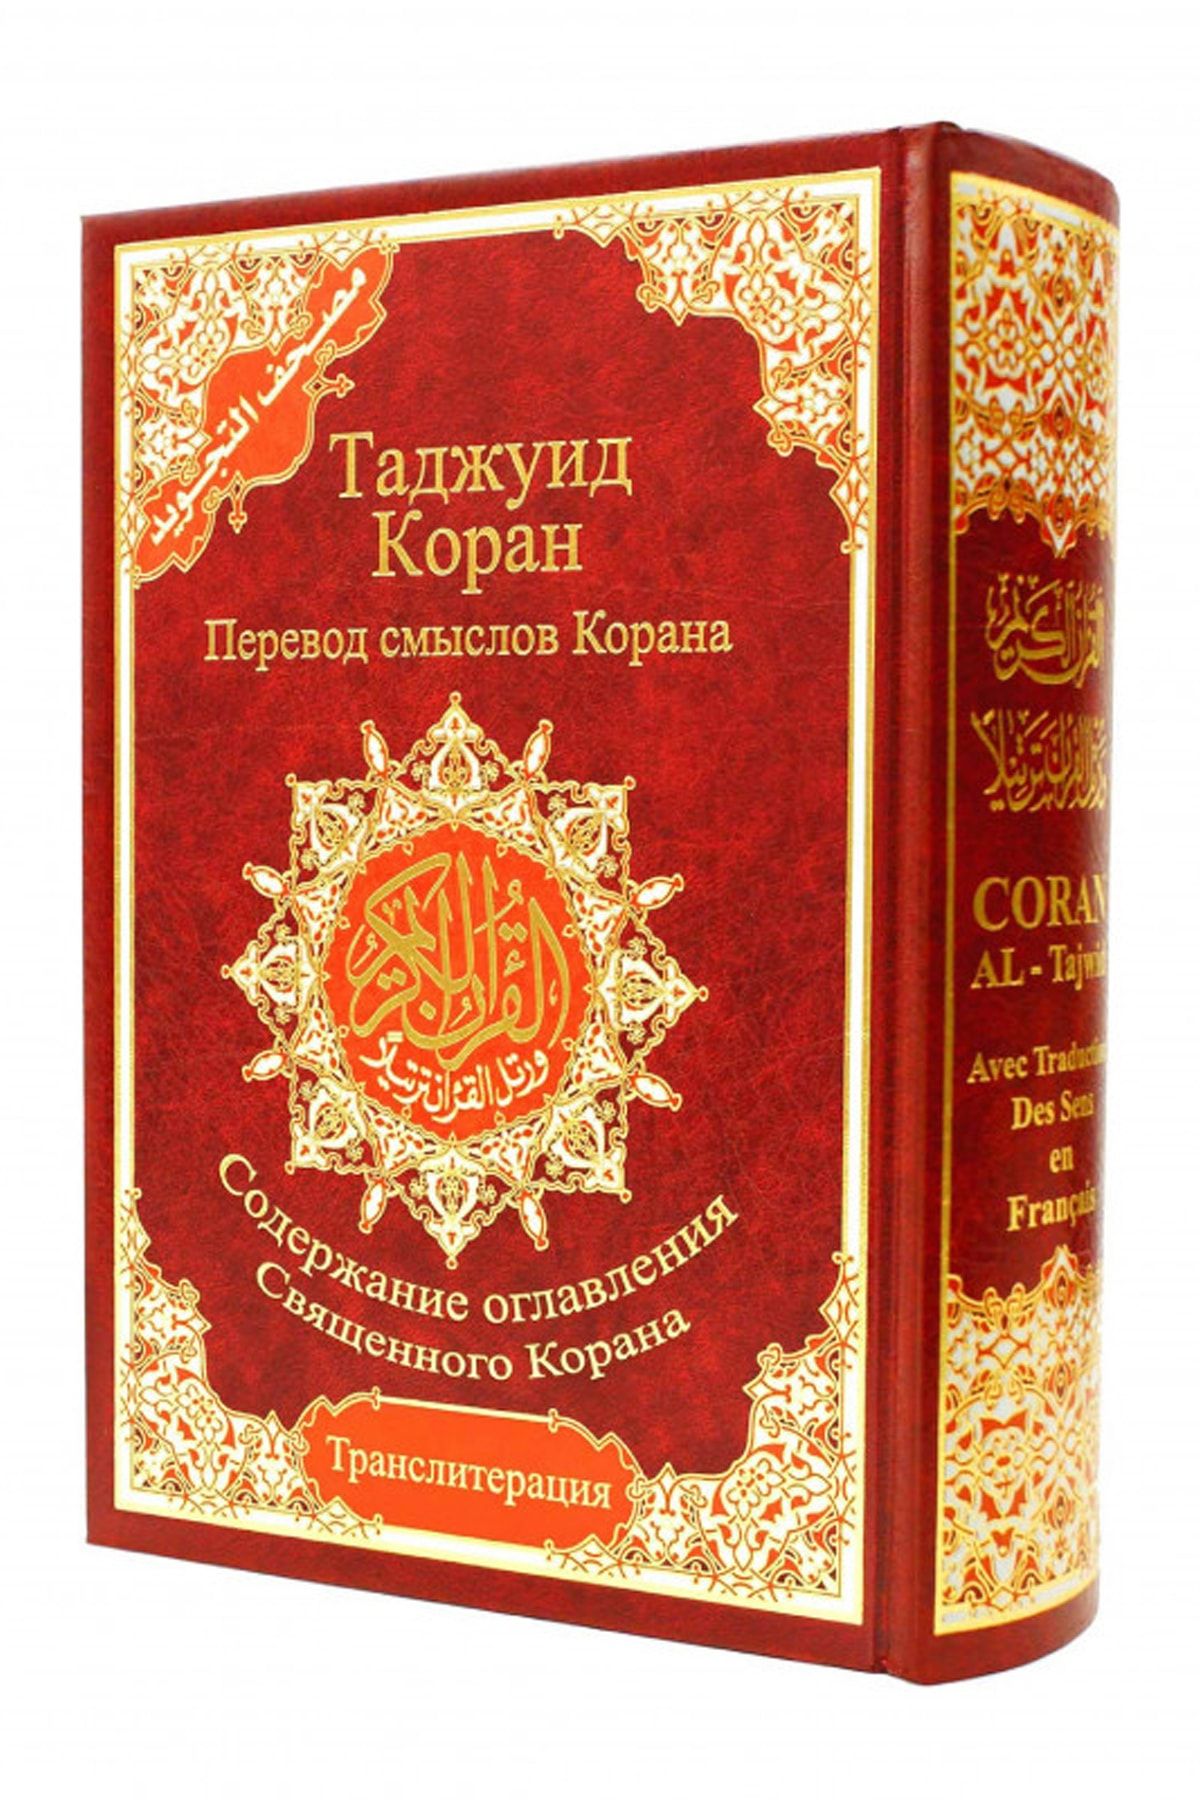 Слушать корана на арабский на русский. Коран. Книга "Коран". Книга Коран на русском языке. Коран книга на арабском.